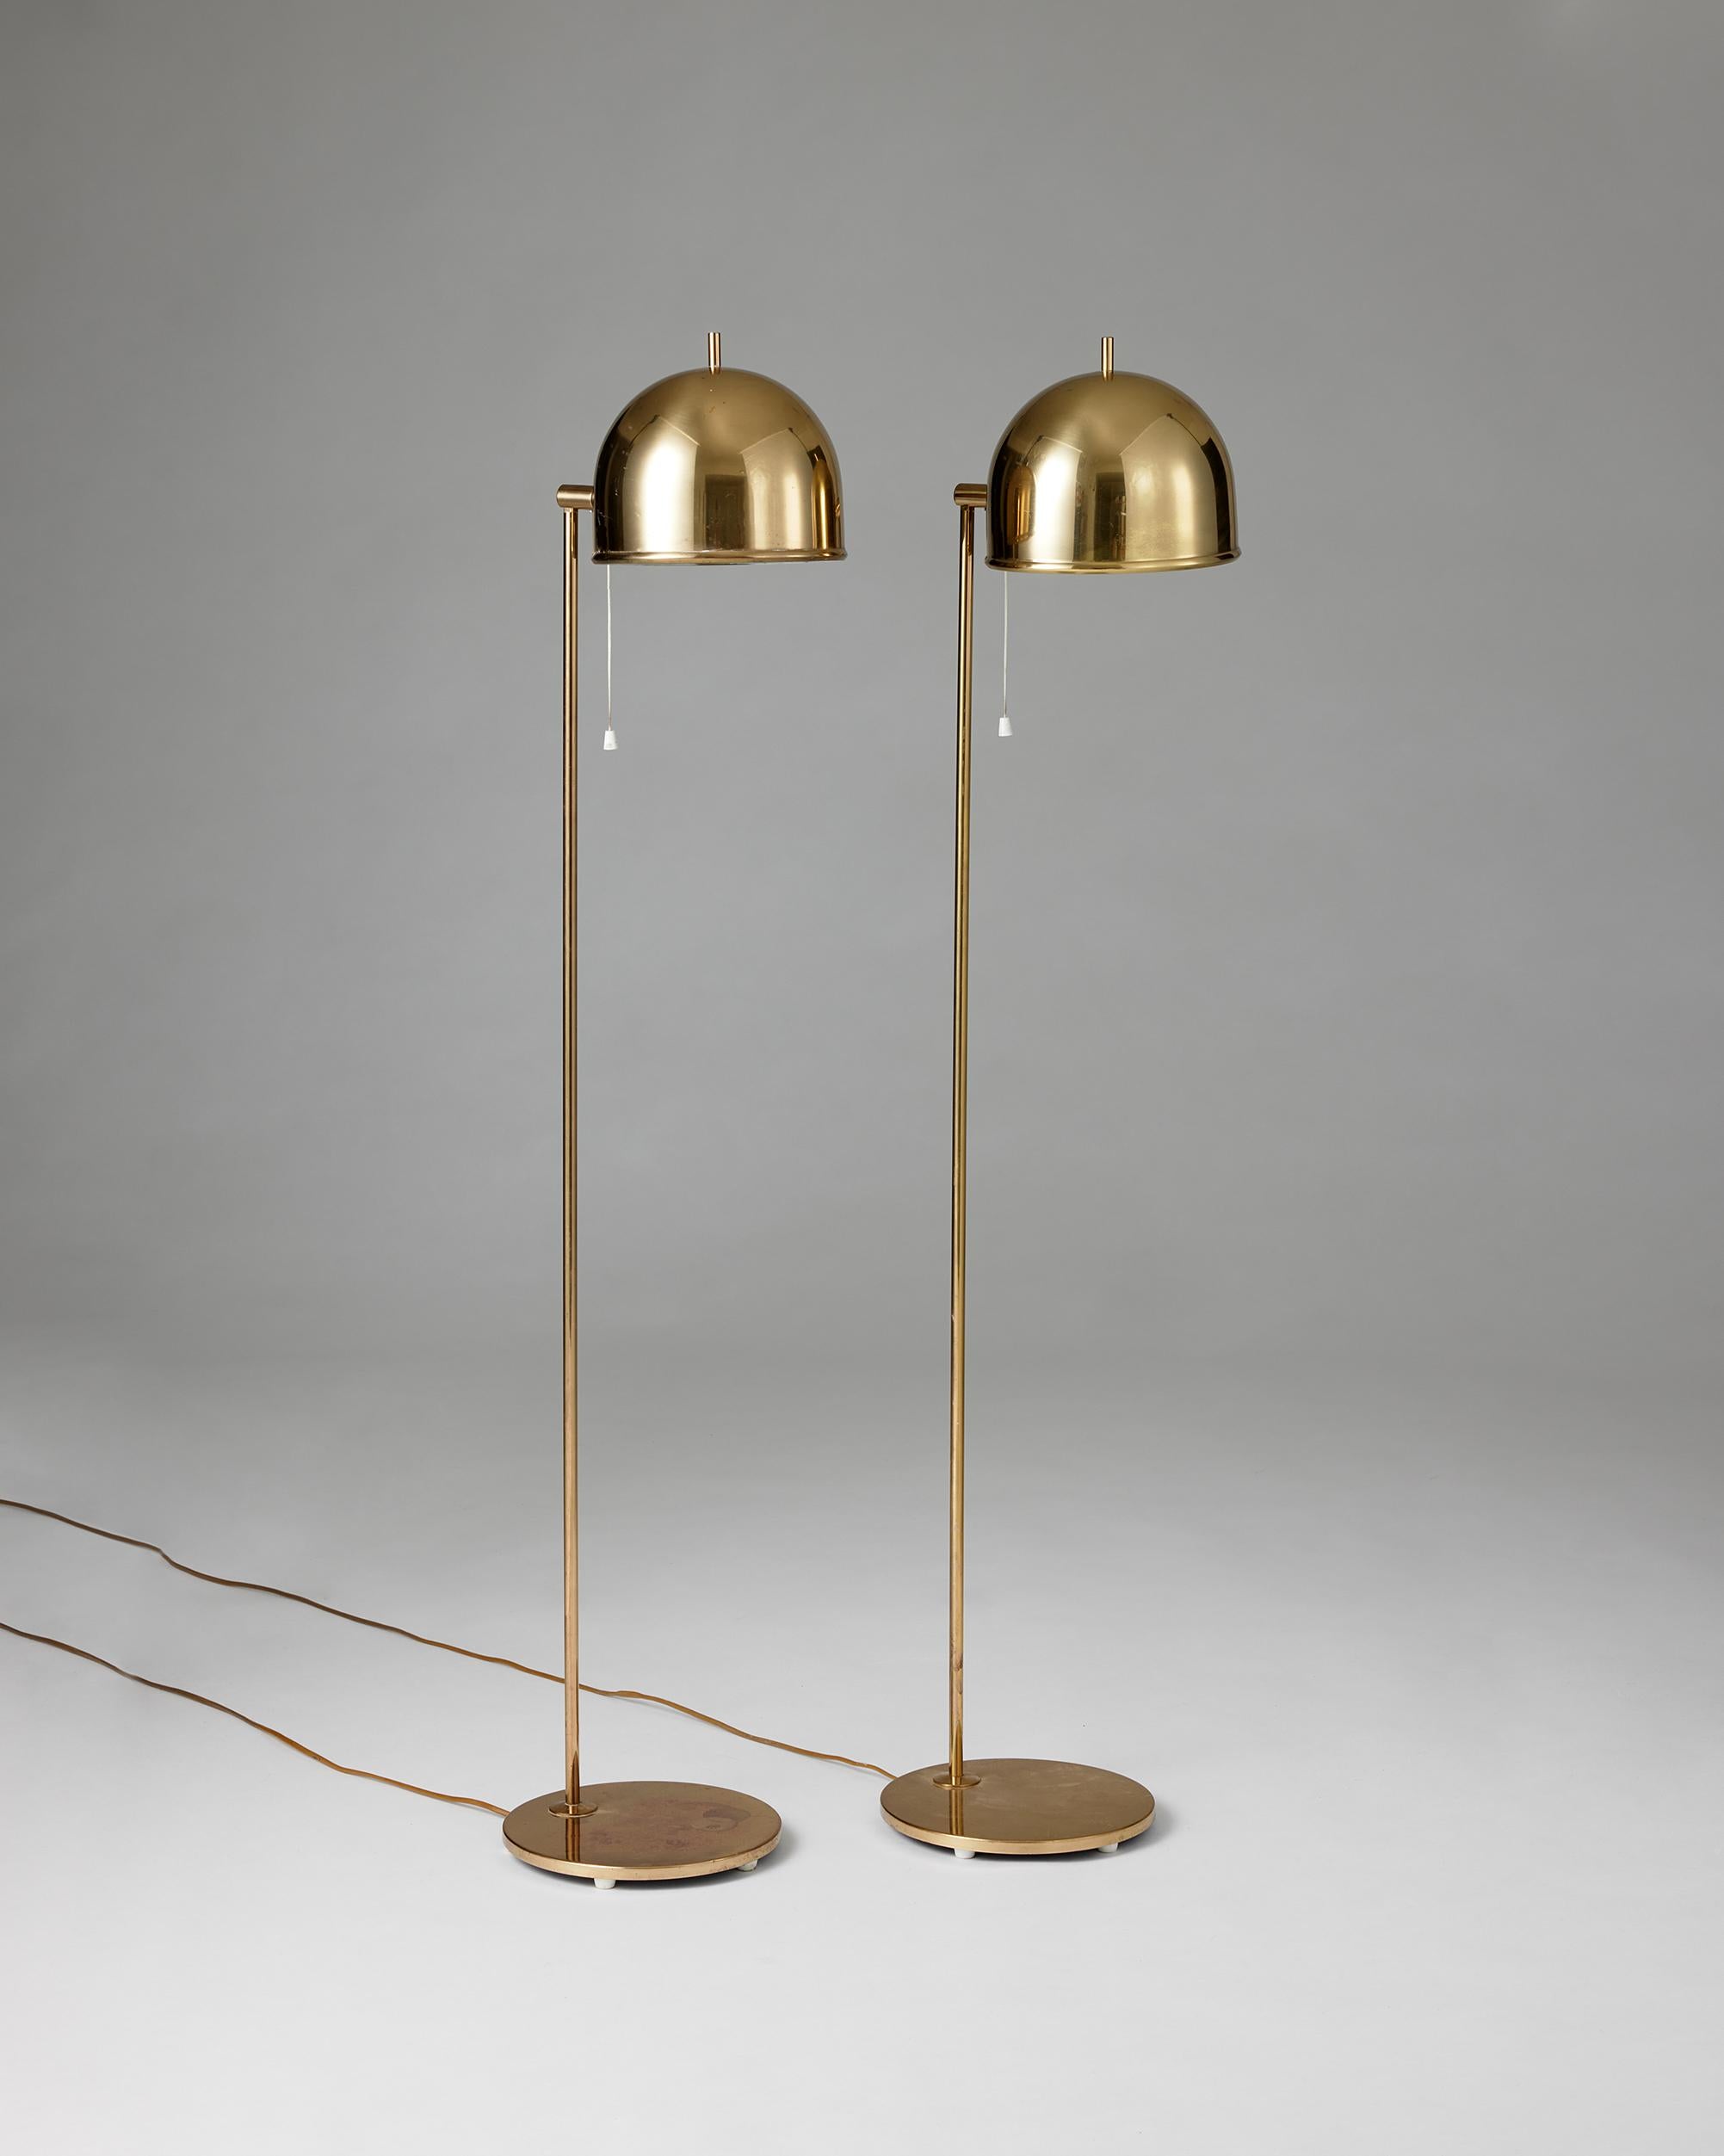 Pair of floor lamps model G-075 designed by Eje Ahlgren for Bergboms,
Sweden, 1960s.

Brass.

Stamped.

H: 125 cm
W: 23 cm
D: 28 cm